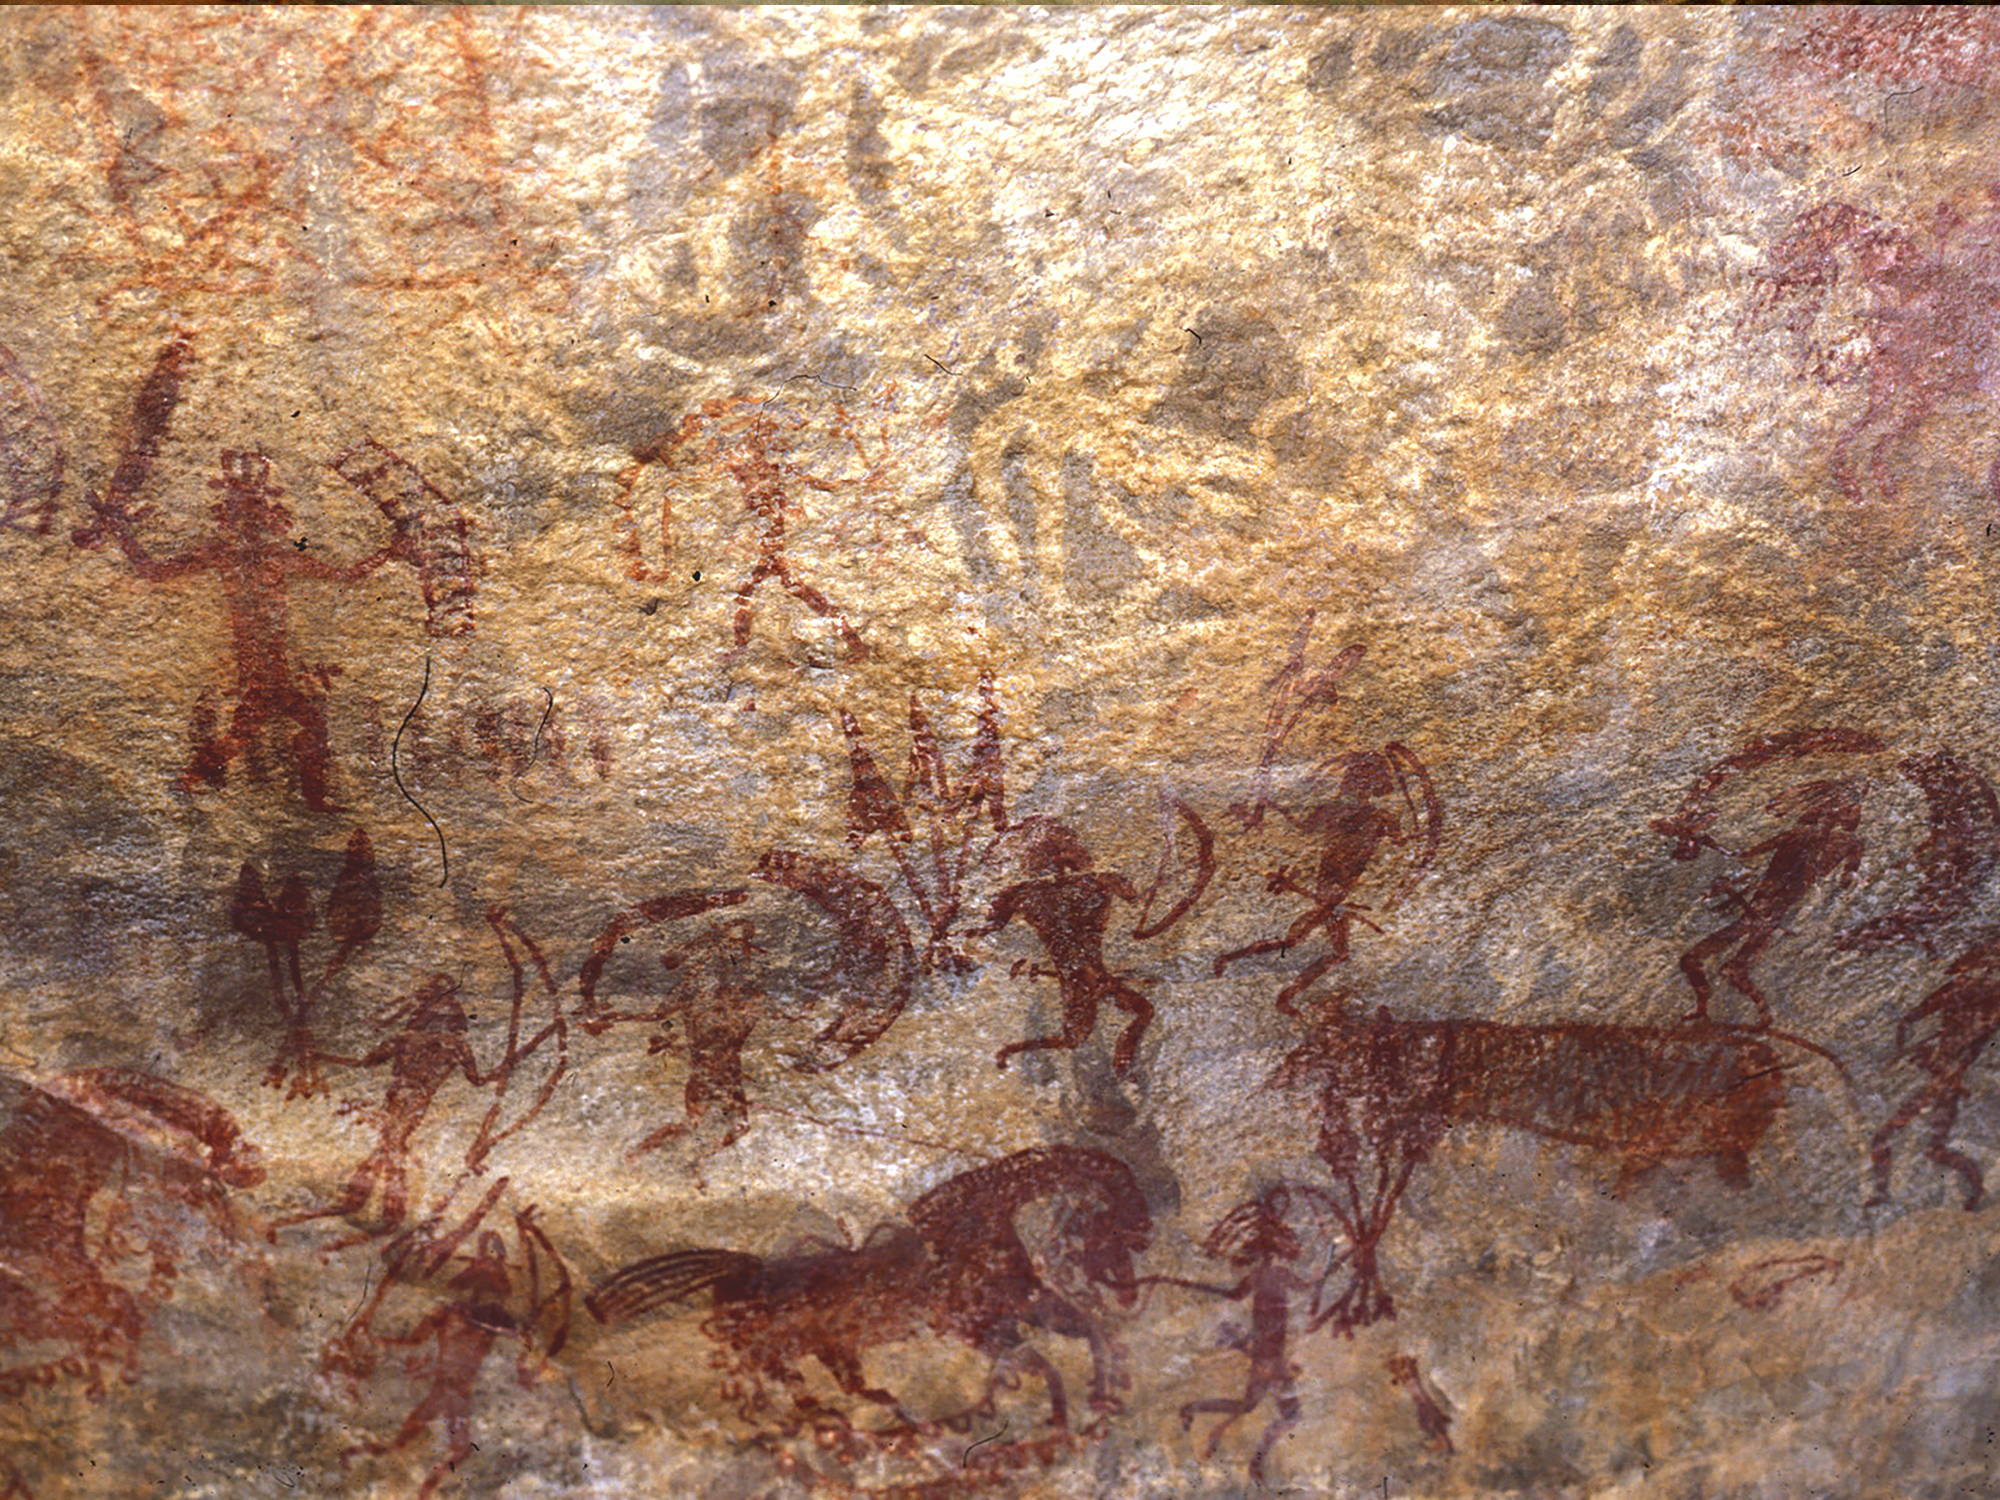 India Rock Art Cave Paintings Characteristics Bradshaw Foundation